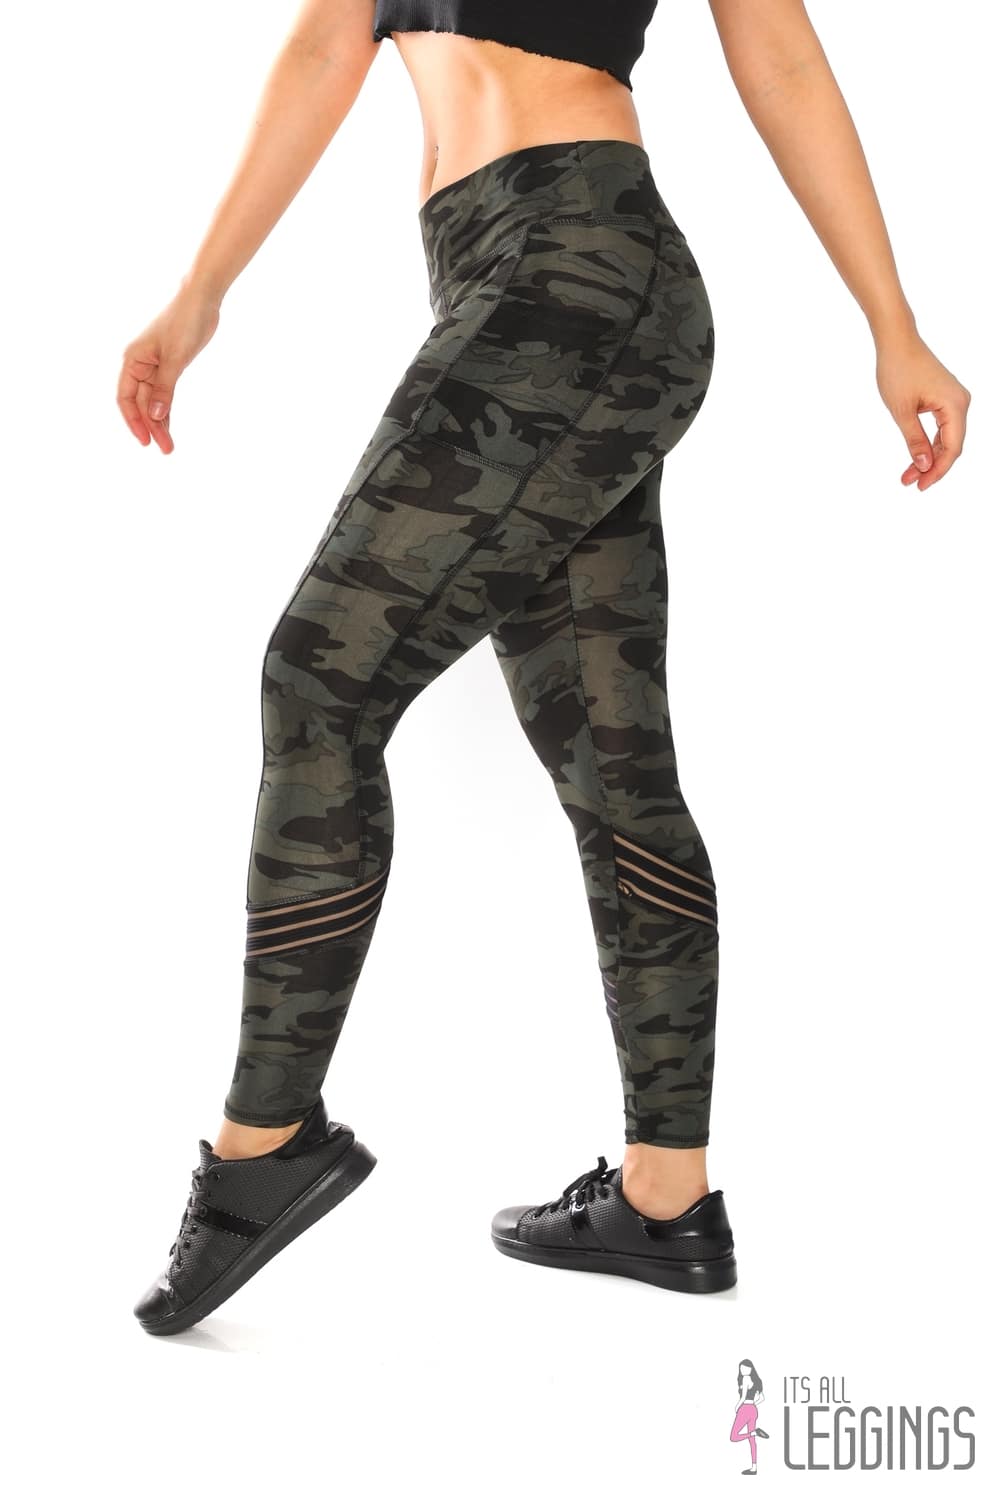 Activewear High Waisted Dark Camo Print Yoga Pants with Contrasting Stripes